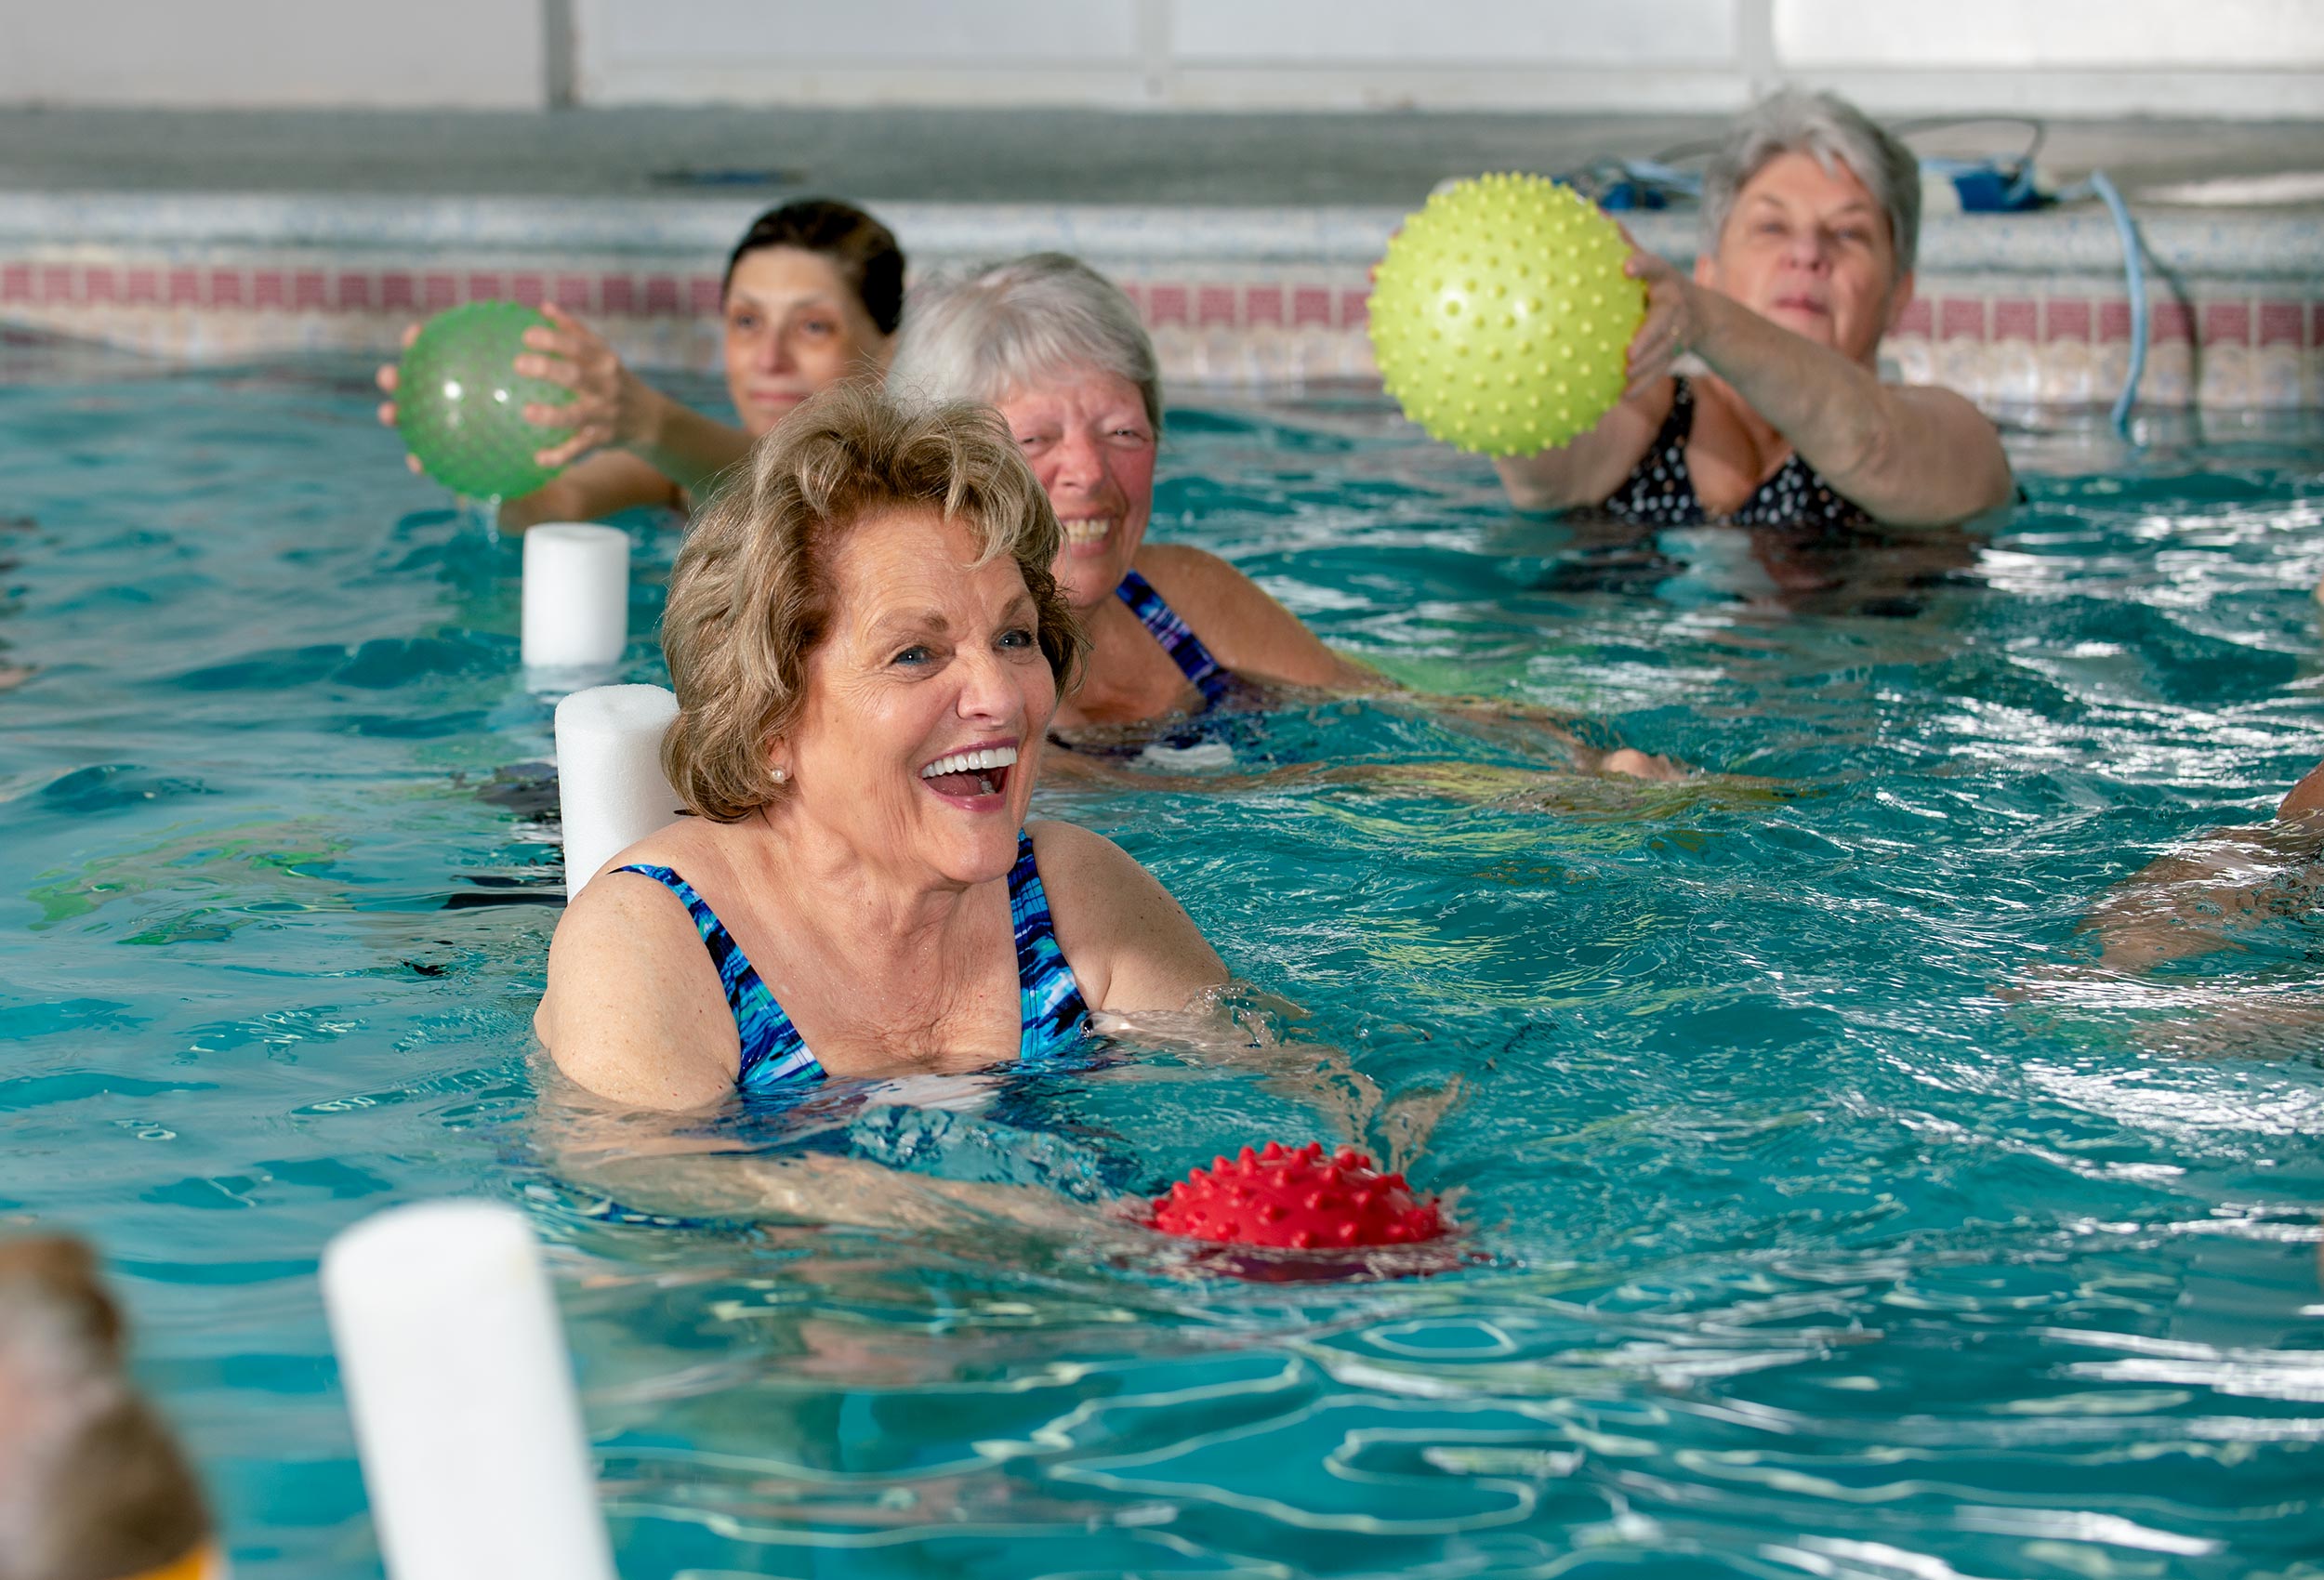 Seniors health and wellness water aerobics class at indoor pool 